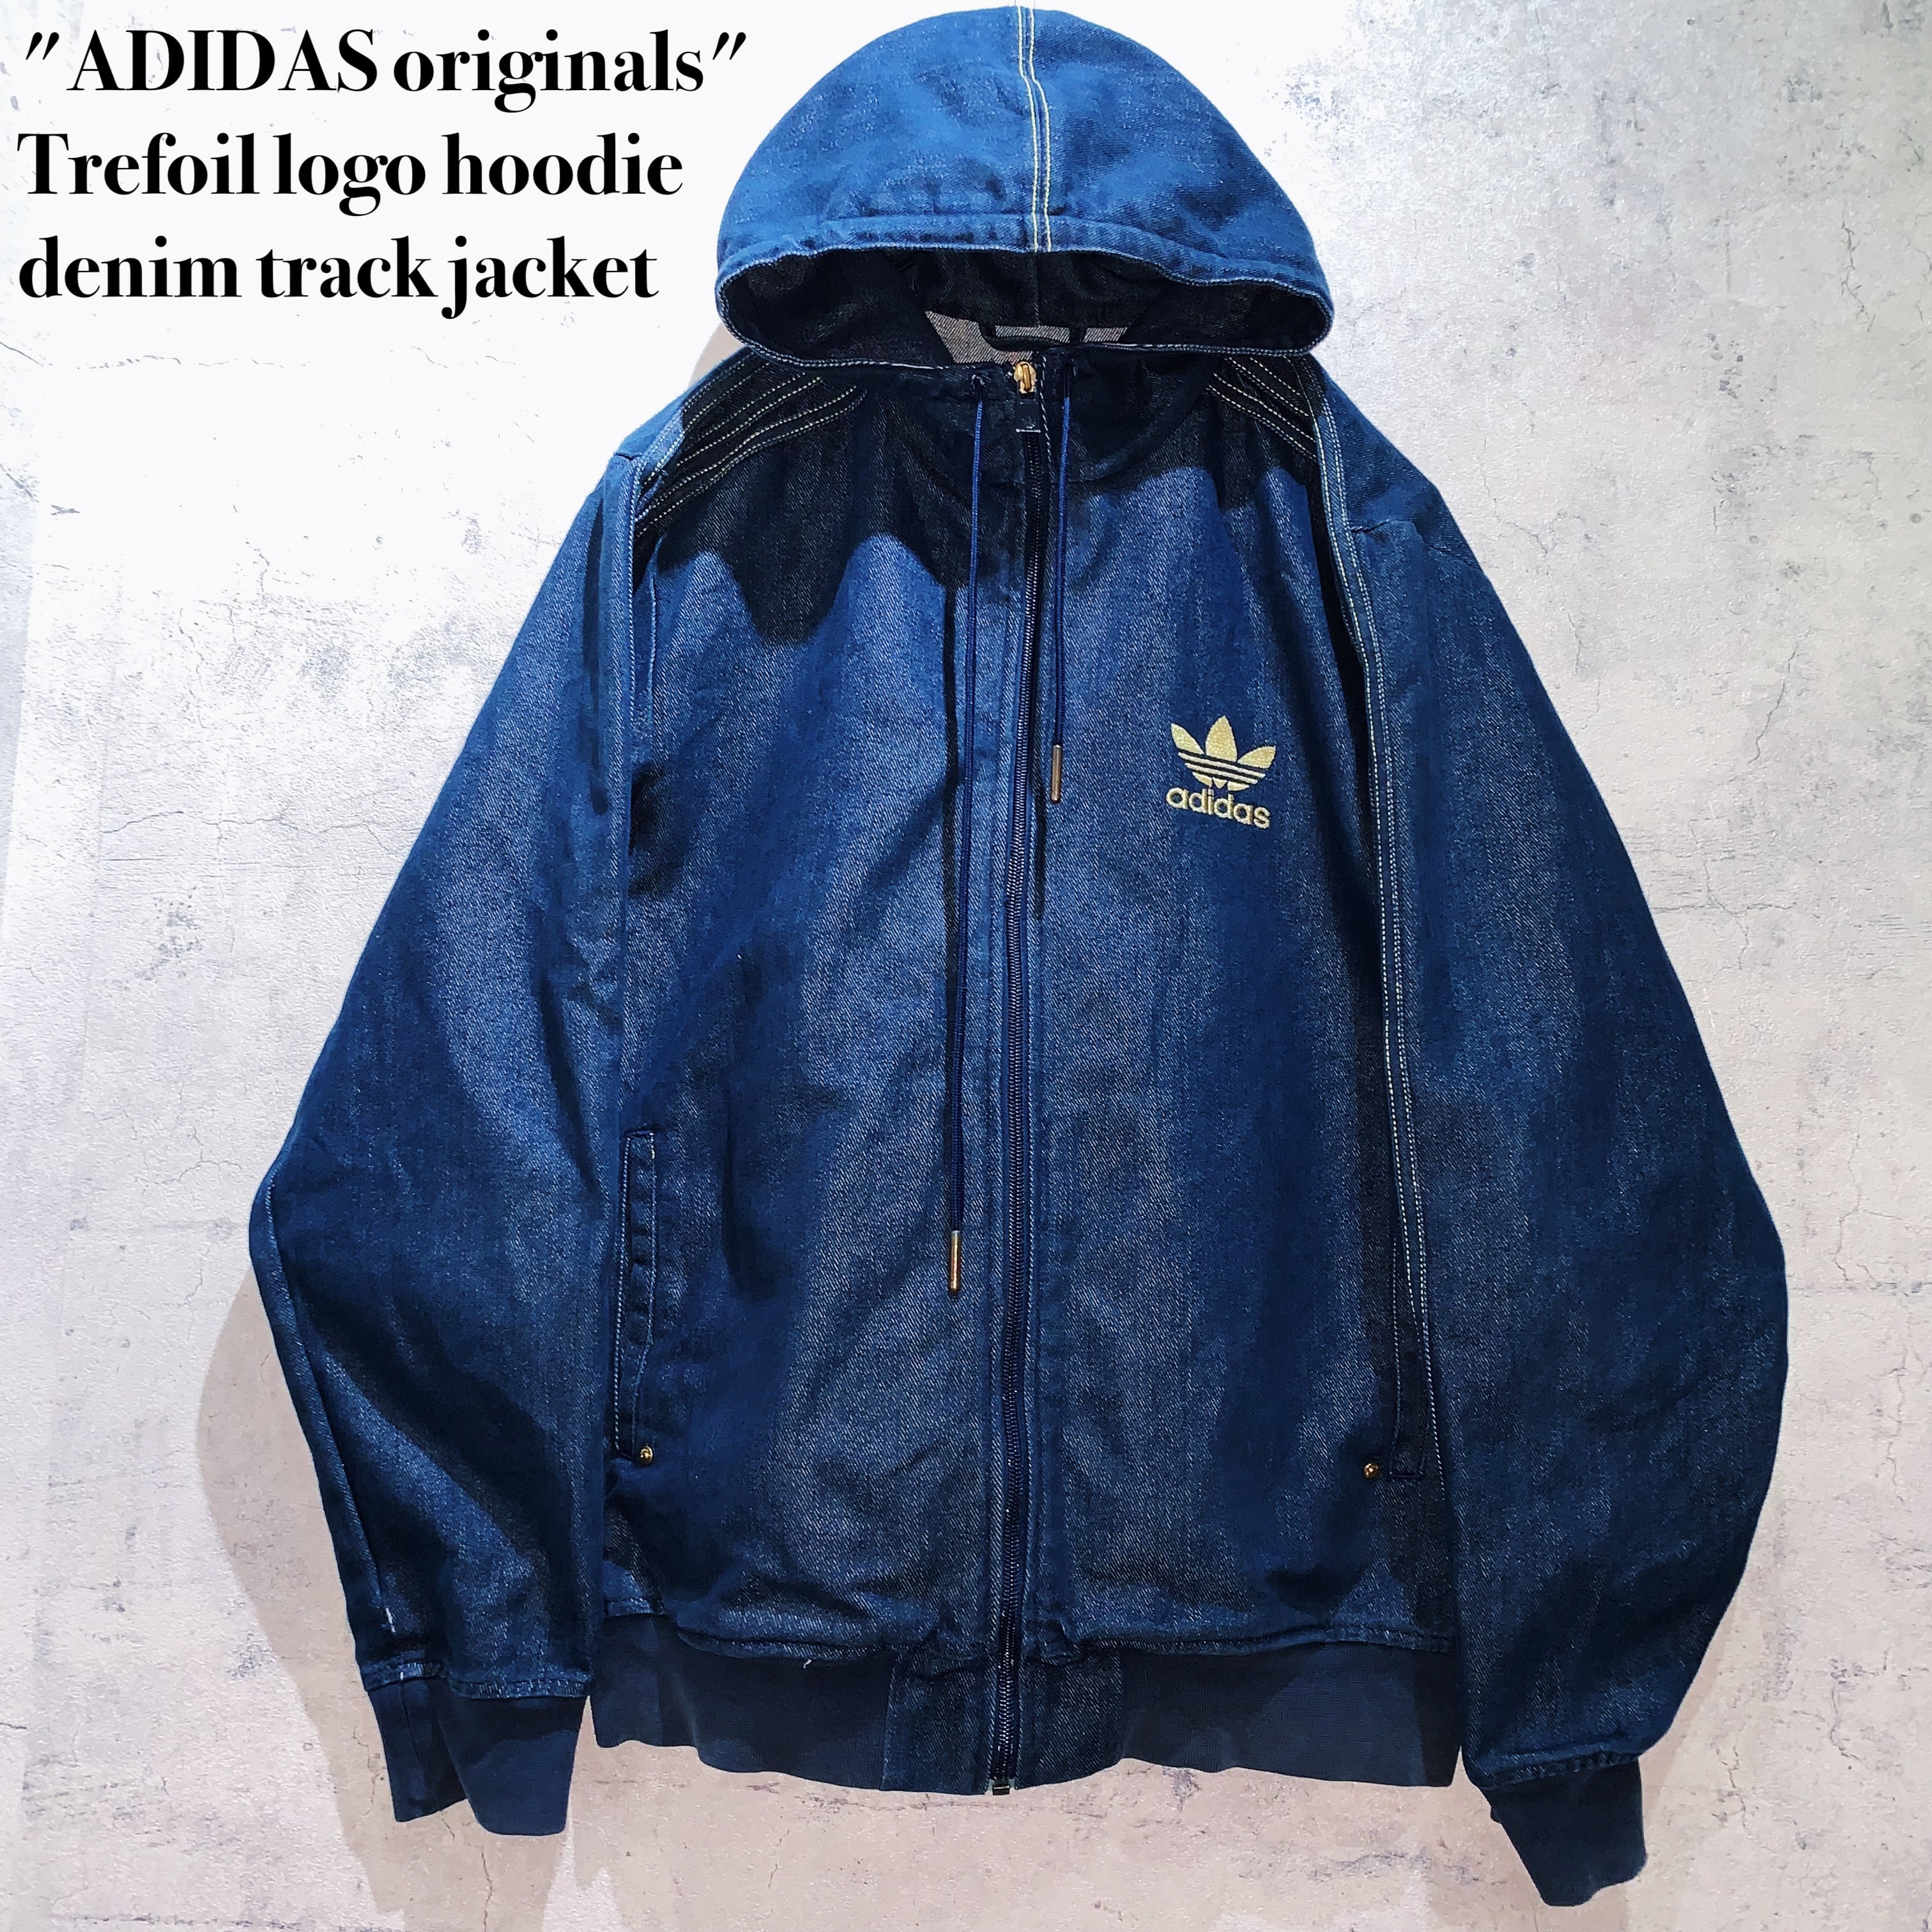 ADIDAS originals"Trefoil logo hoodie denim track jacket | ayne